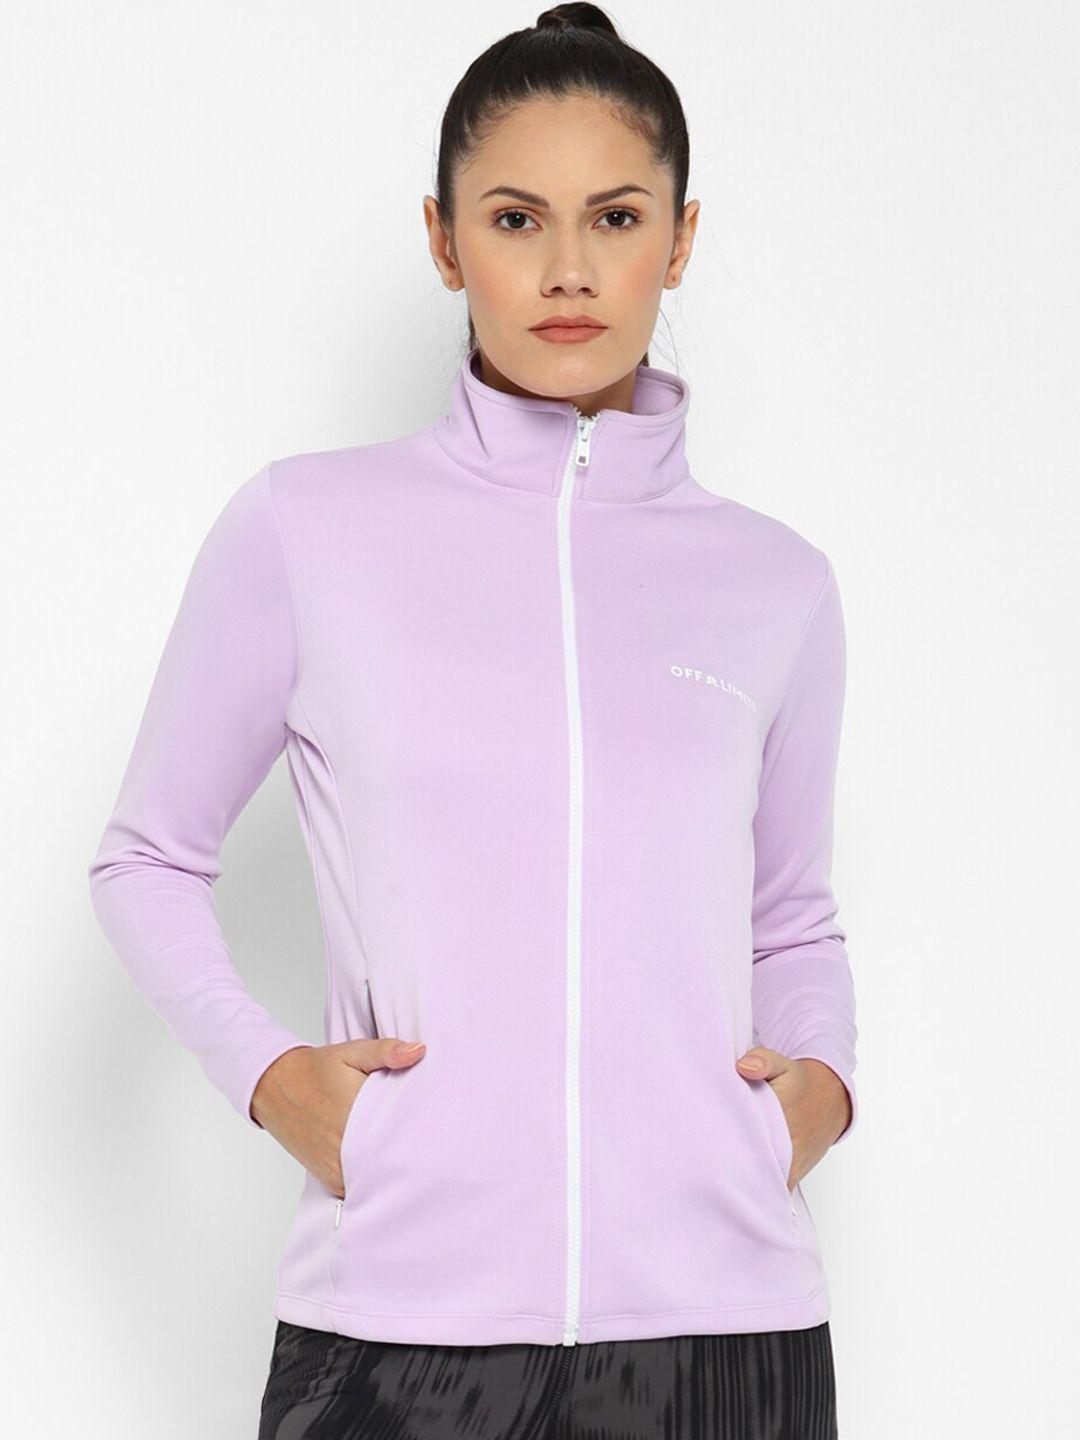 off limits women purple floral colourblocked lightweight longline training or gym sporty jacket